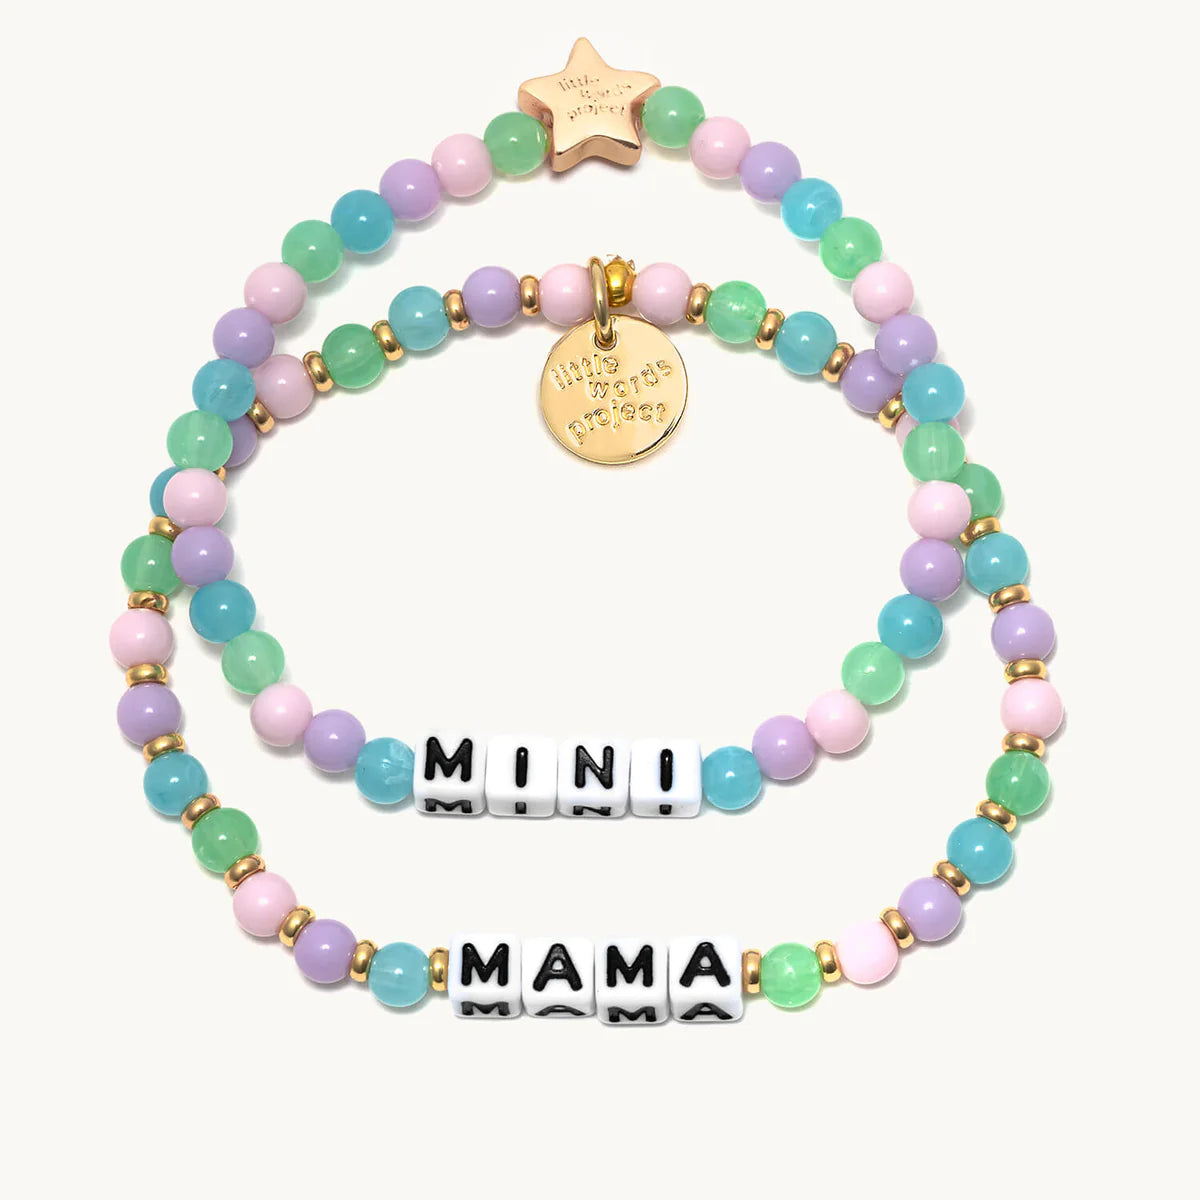 Little Words Project Mama&Mini Bracelets